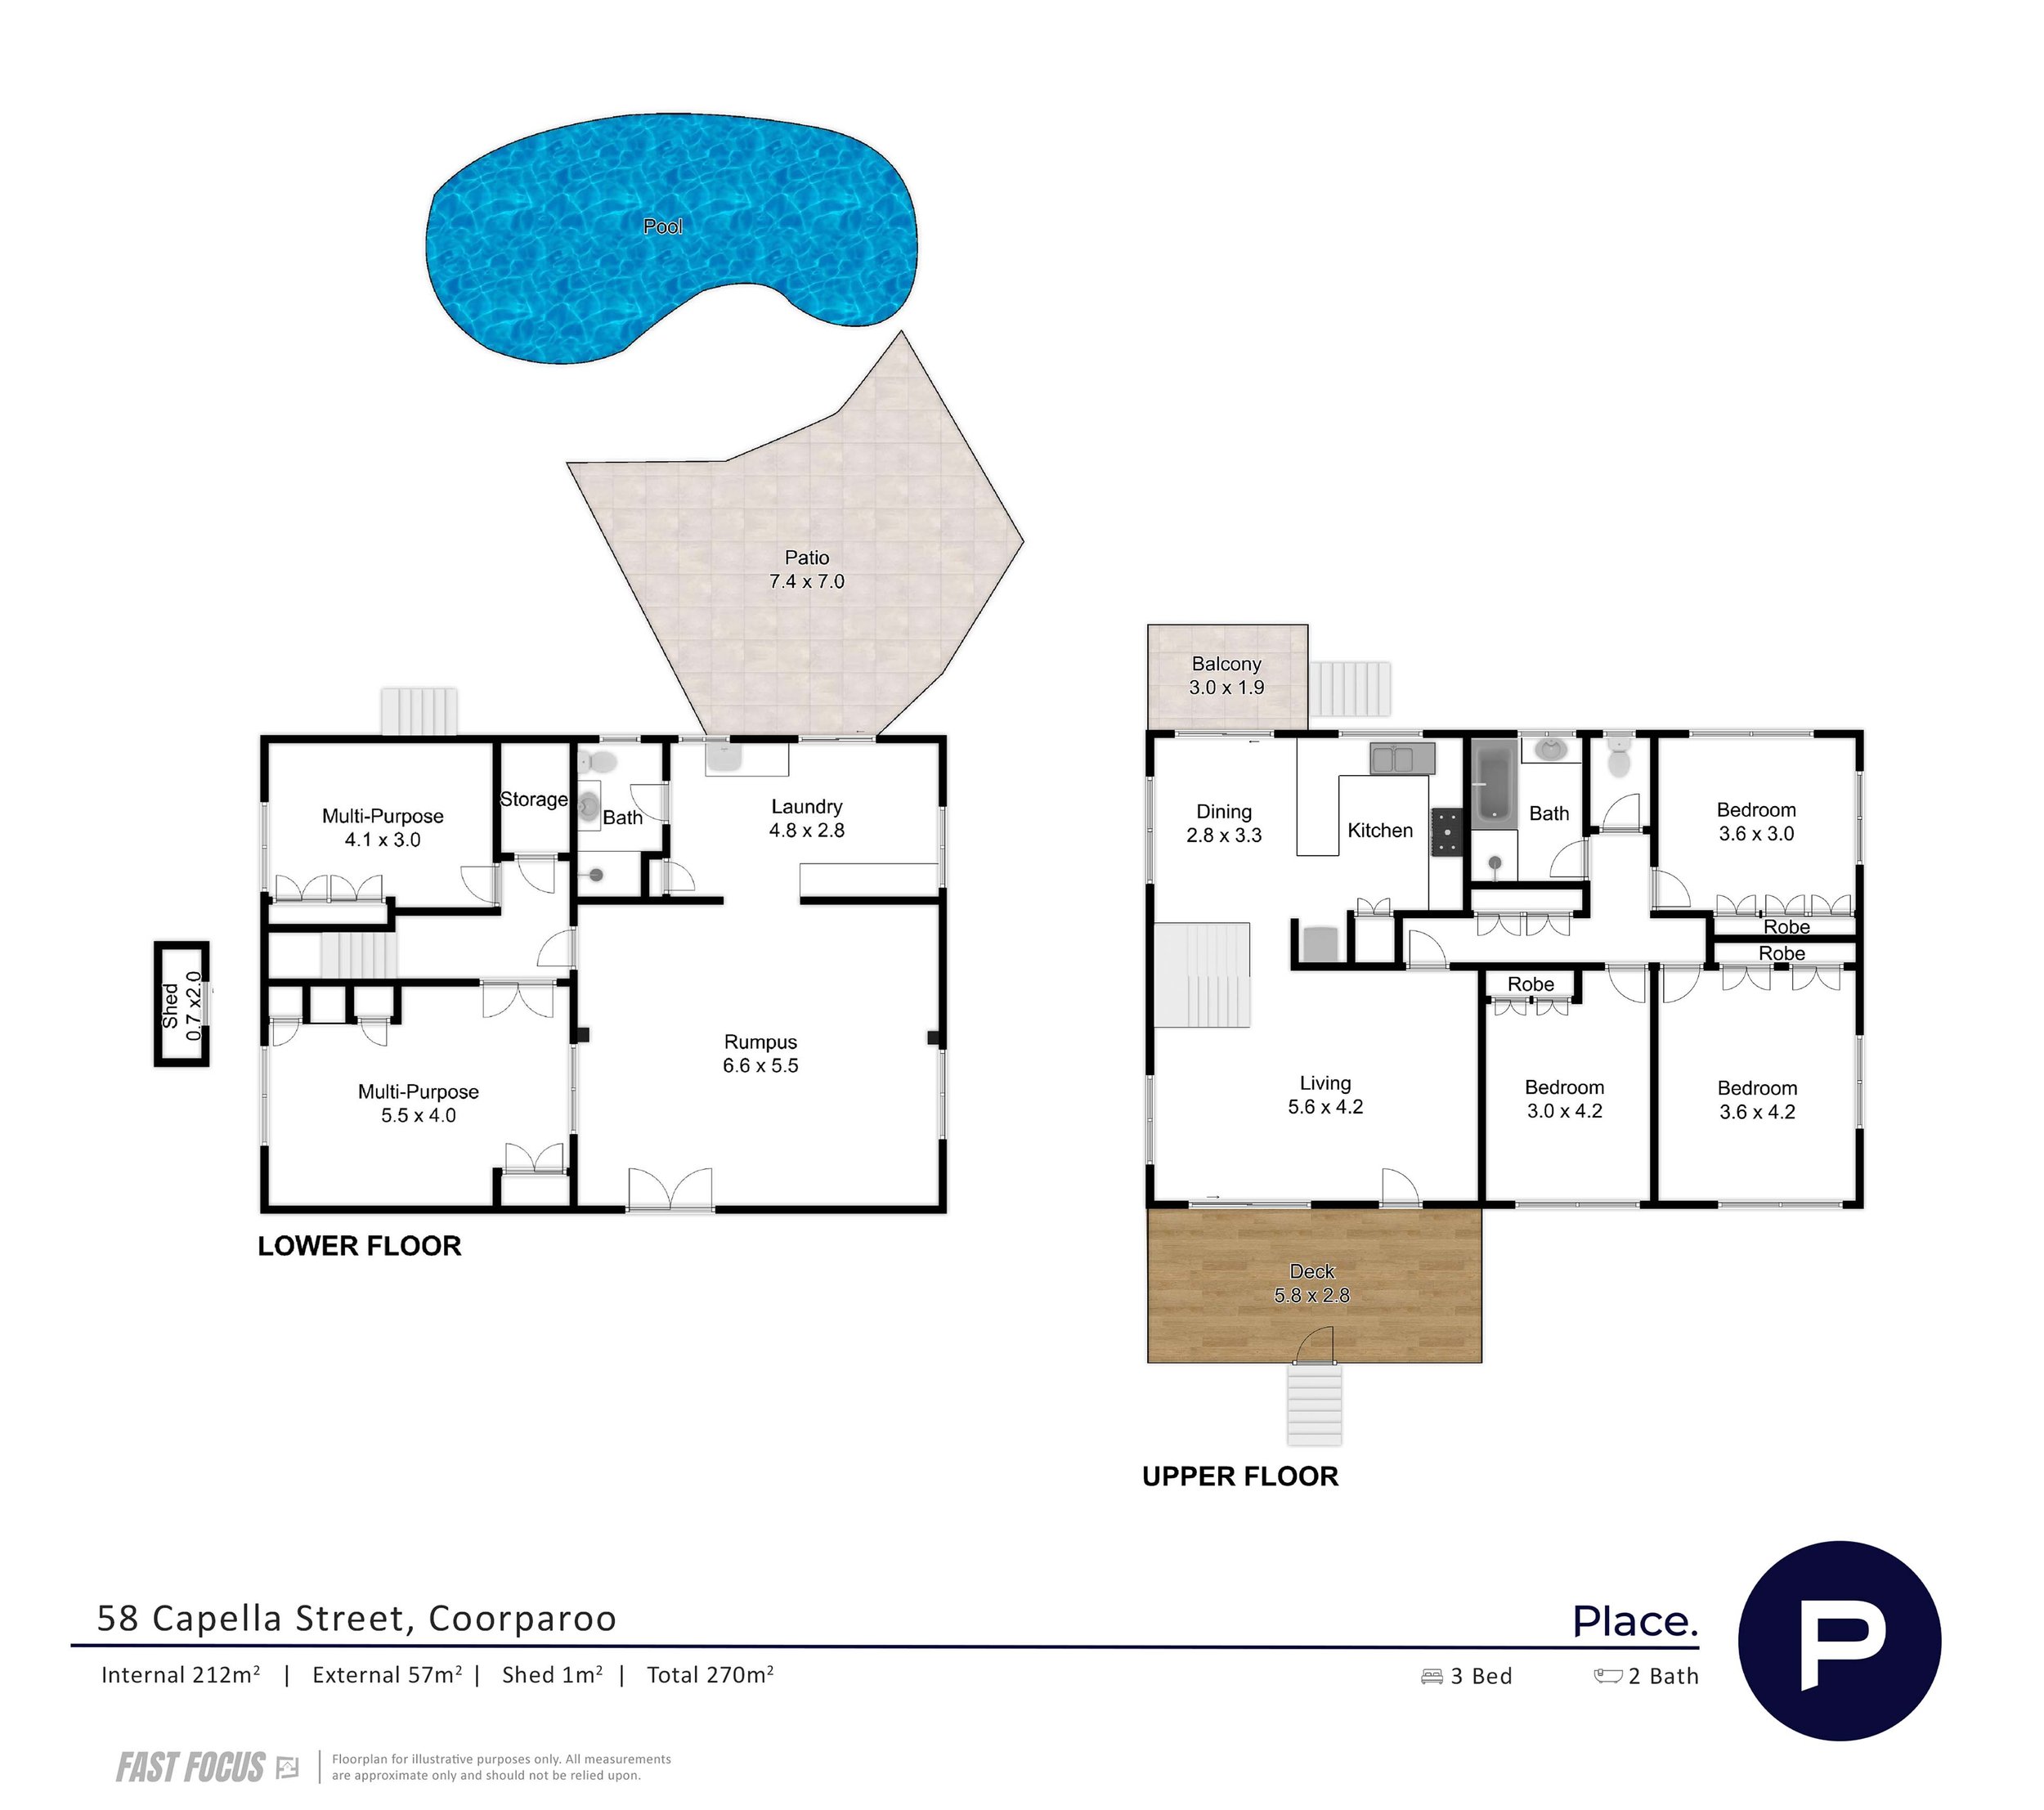 58 Capella Street, Coorparoo floor plan web.jpg